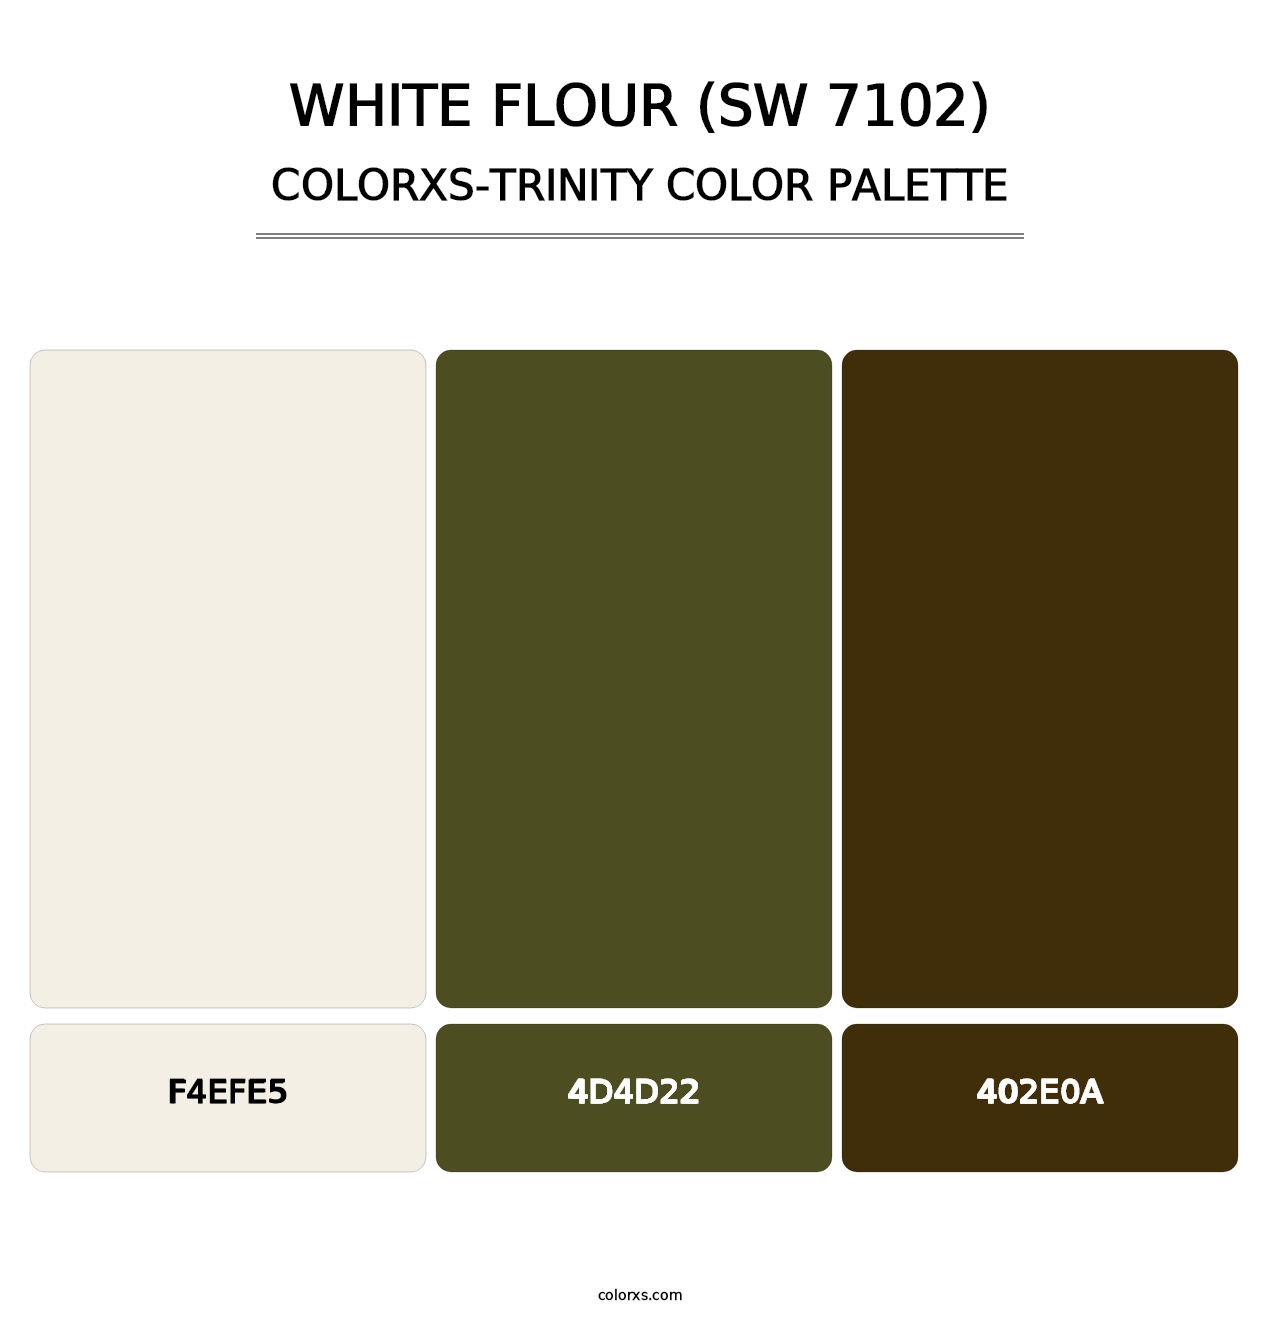 White Flour (SW 7102) - Colorxs Trinity Palette